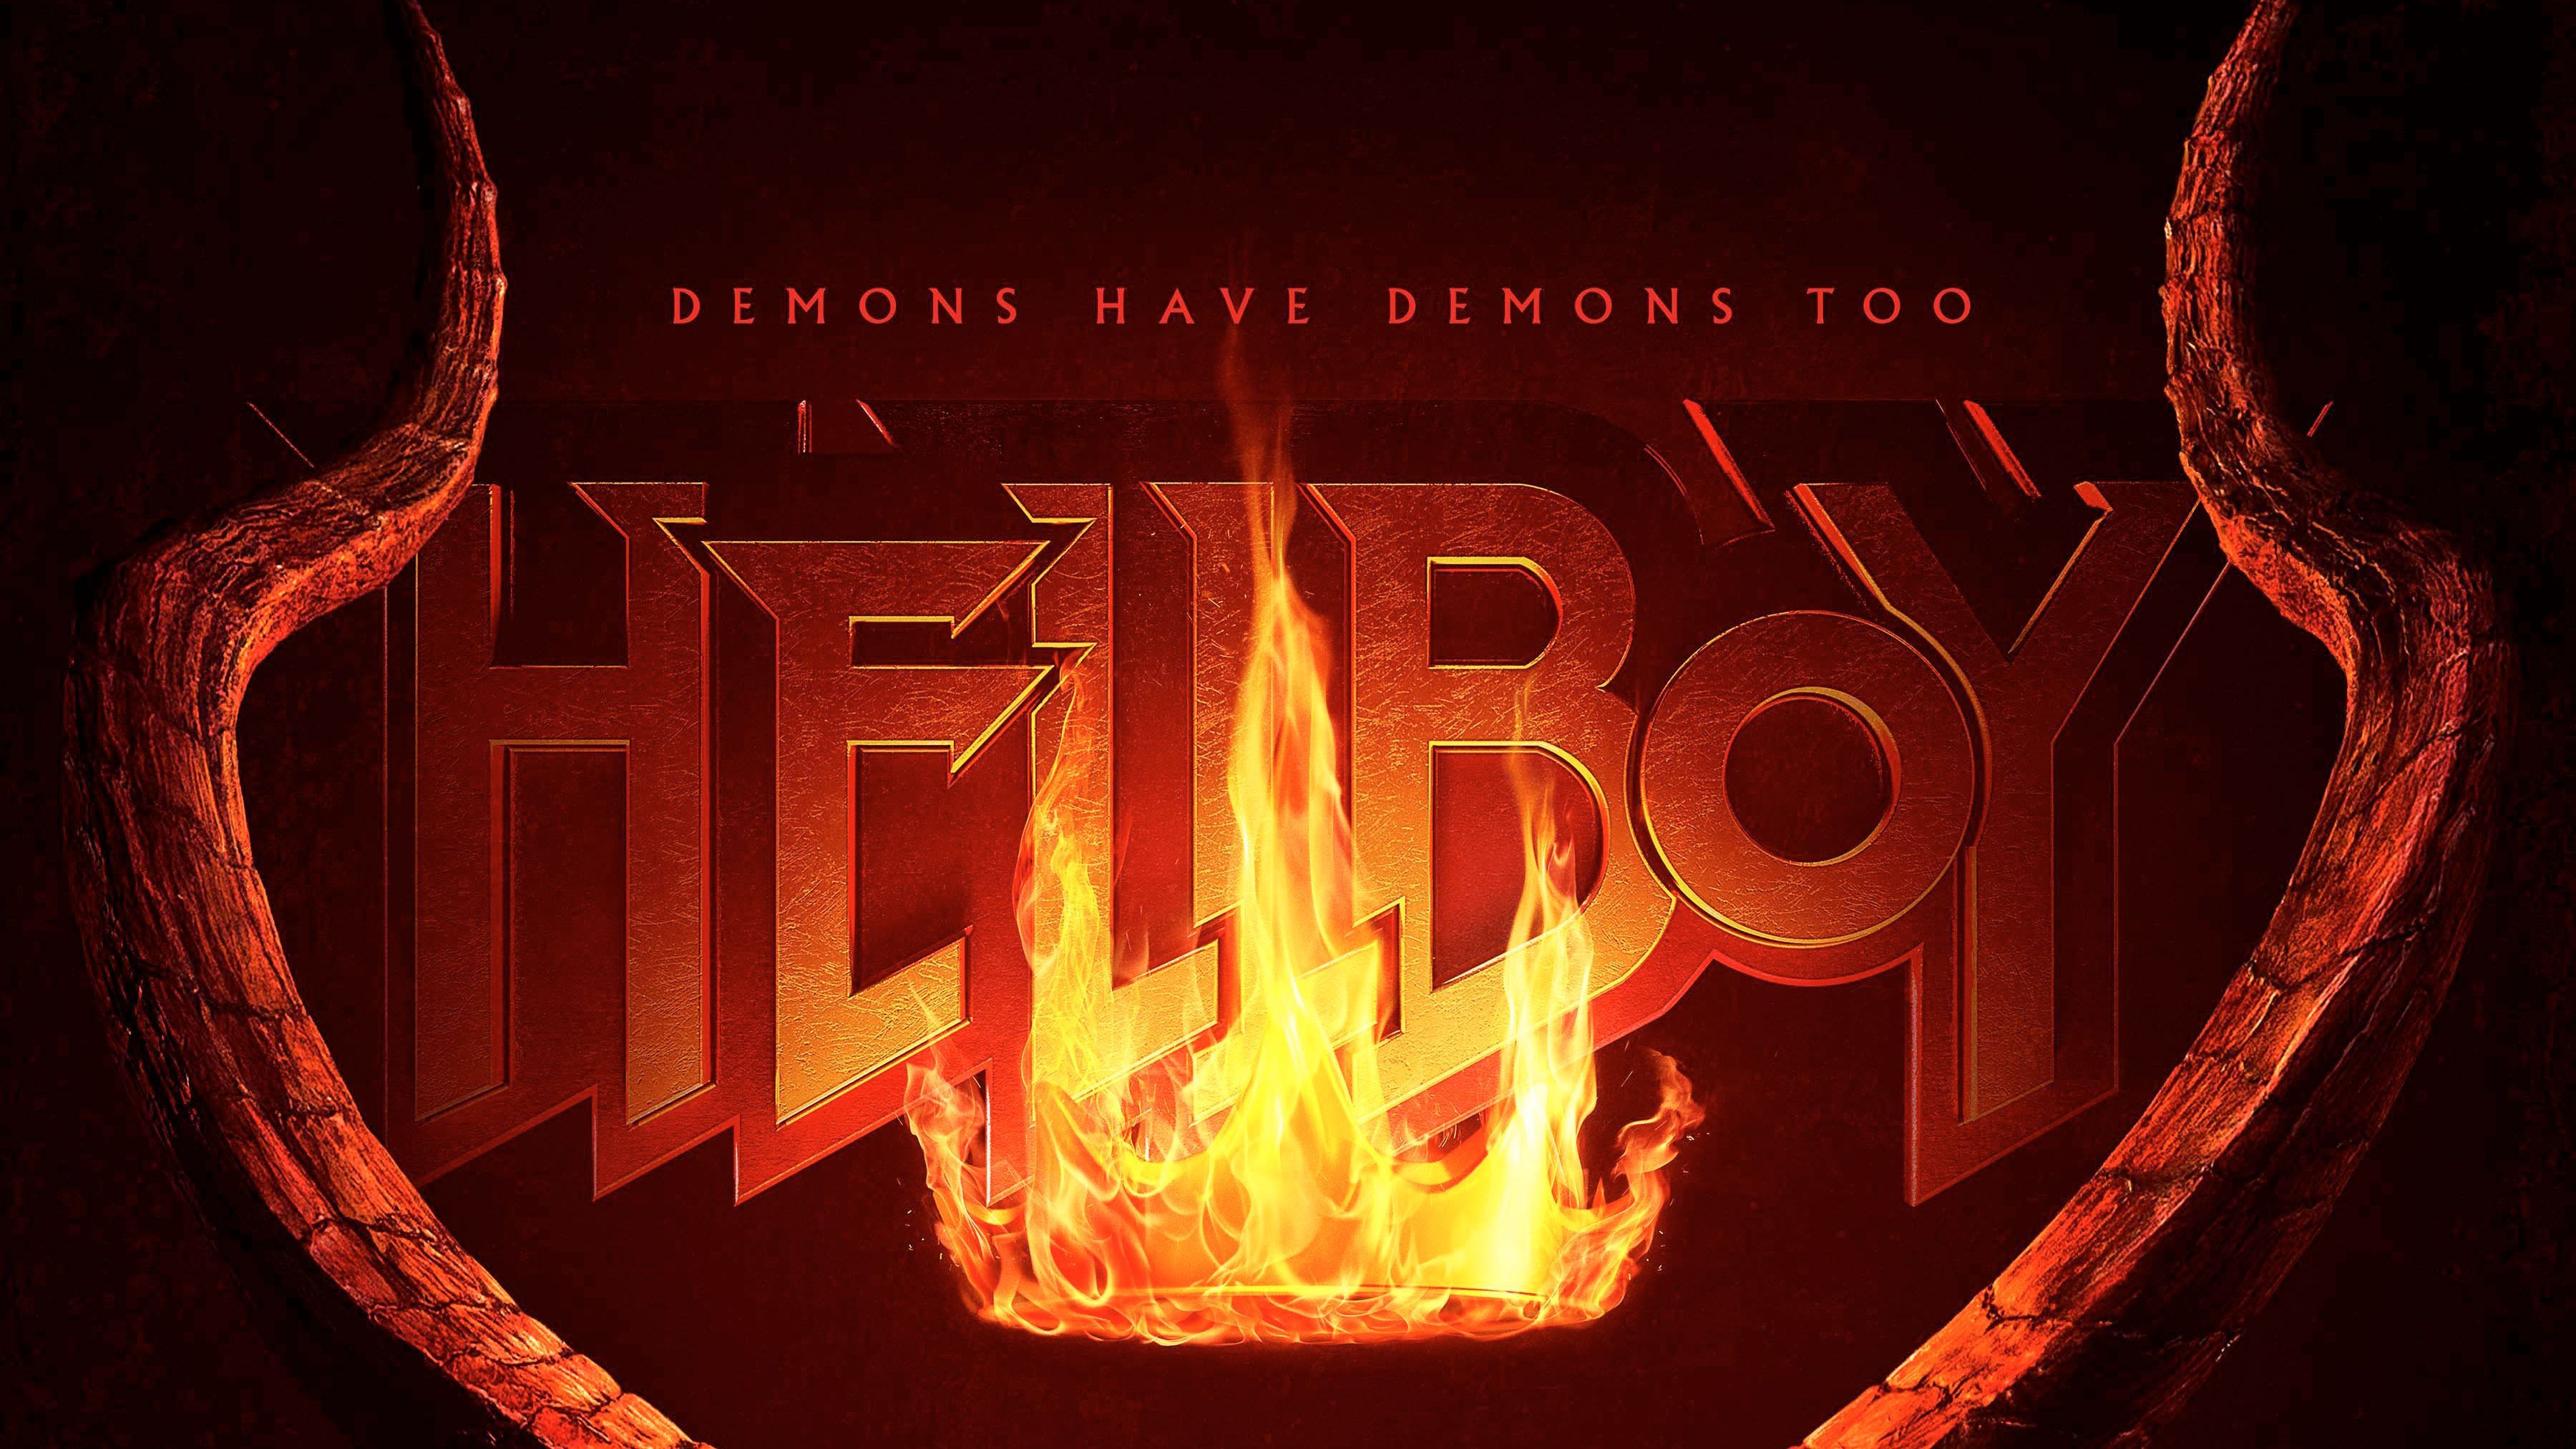 Hellboy 2019 Movie Logo 4k Movies Wallpaper, Logo Wallpaper, Hellboy Wallpaper, Hd Wallpap. Hellboy Wallpaper, Movie Wallpaper, IPhone Wallpaper Inspirational